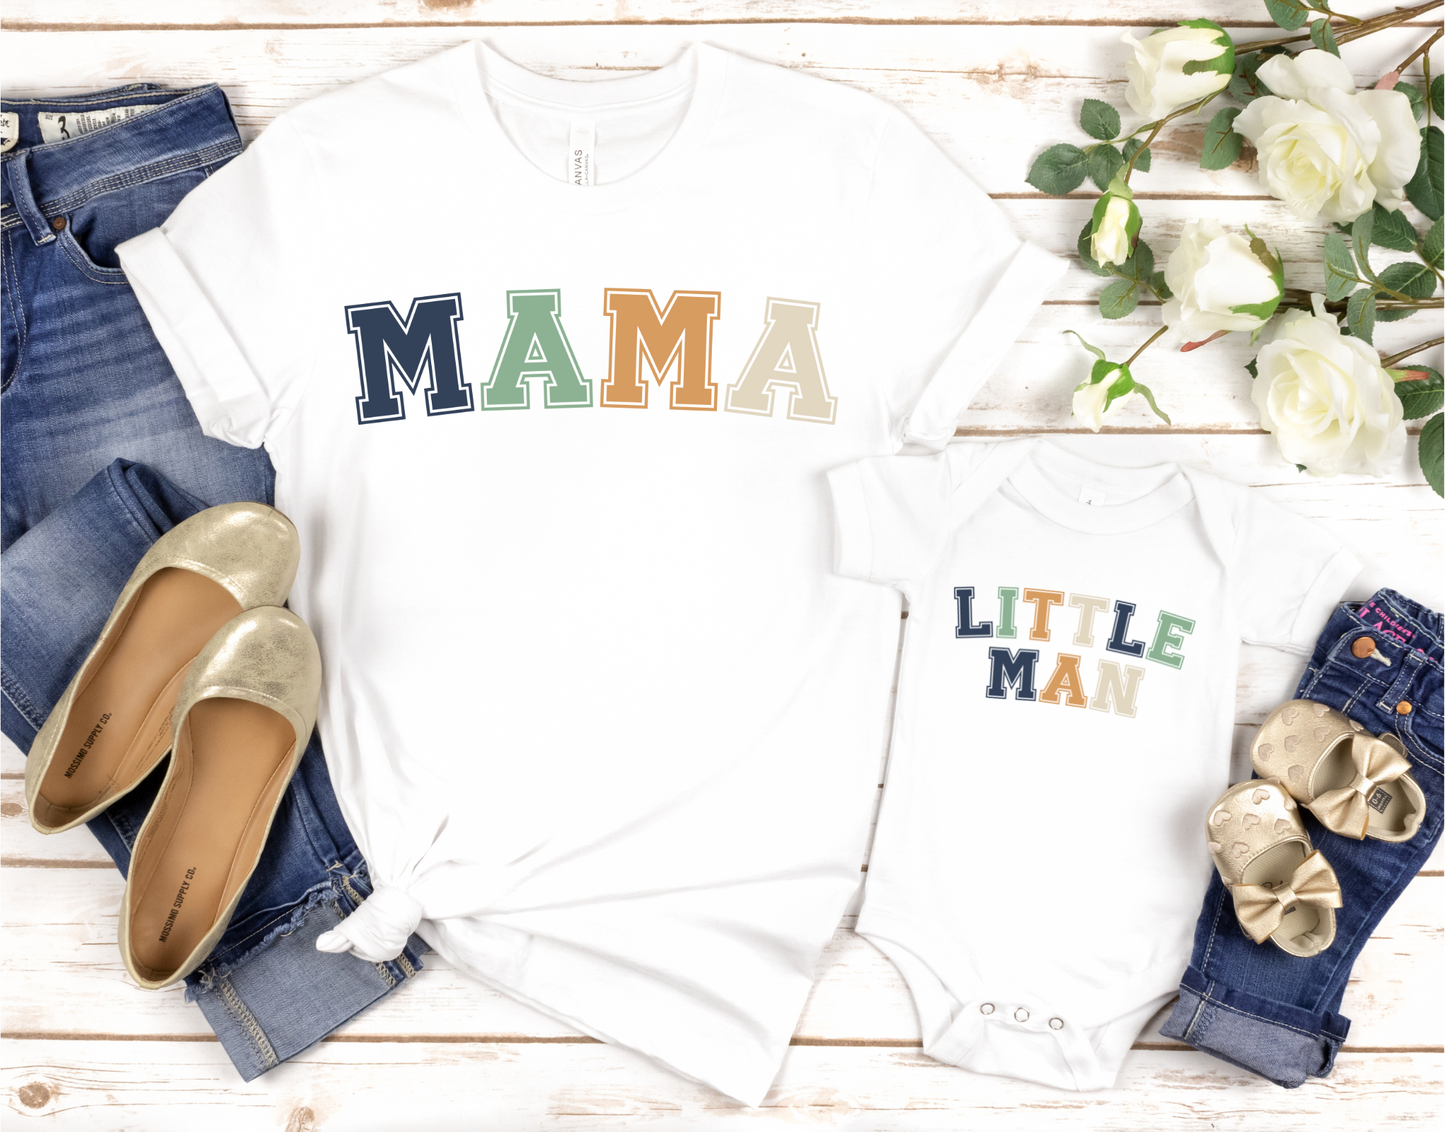 Mama/ Little Man (RTP- Ready to Print)